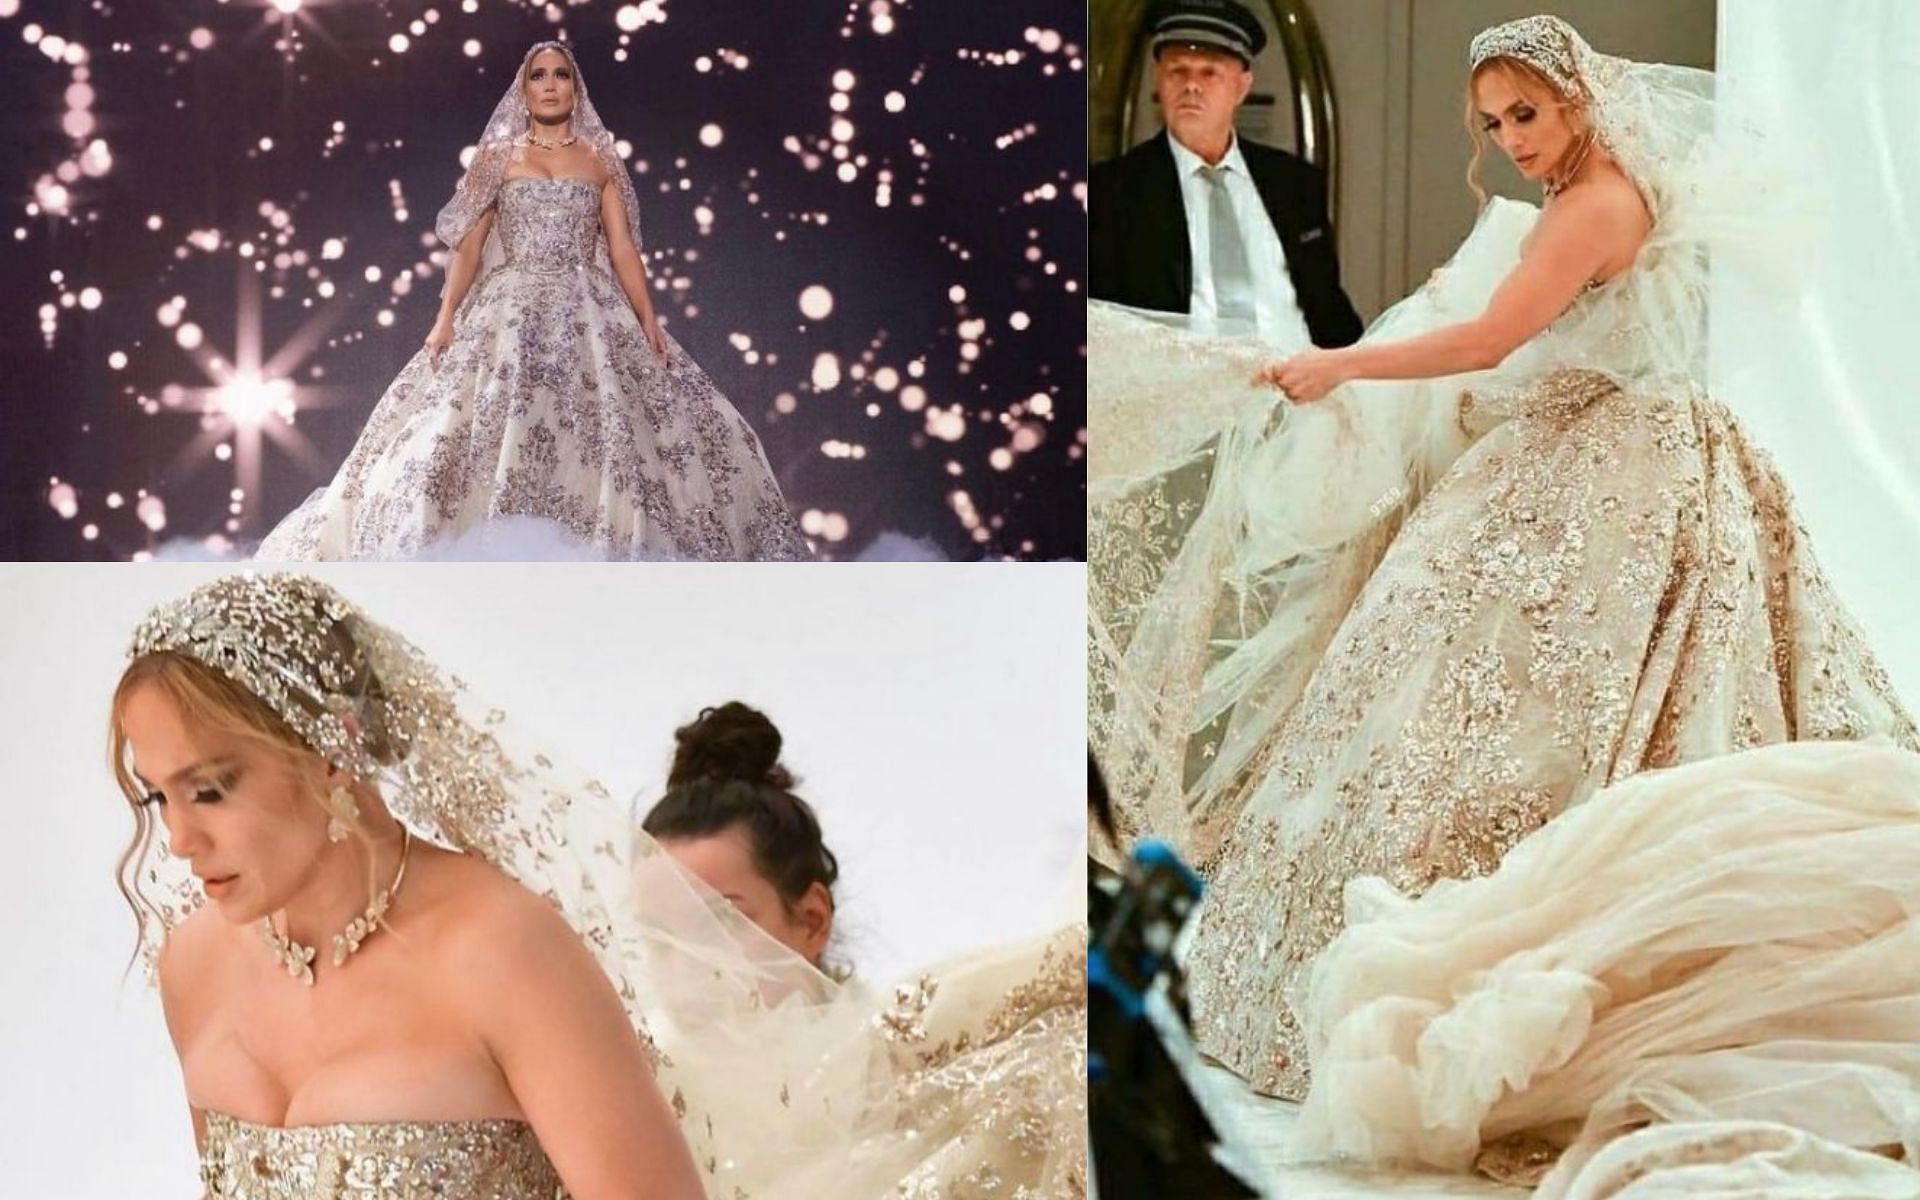 Jennifer Lopez in her Marry Me wedding dress (Image via Instagram/Marrymemovie and stylishtutorial)